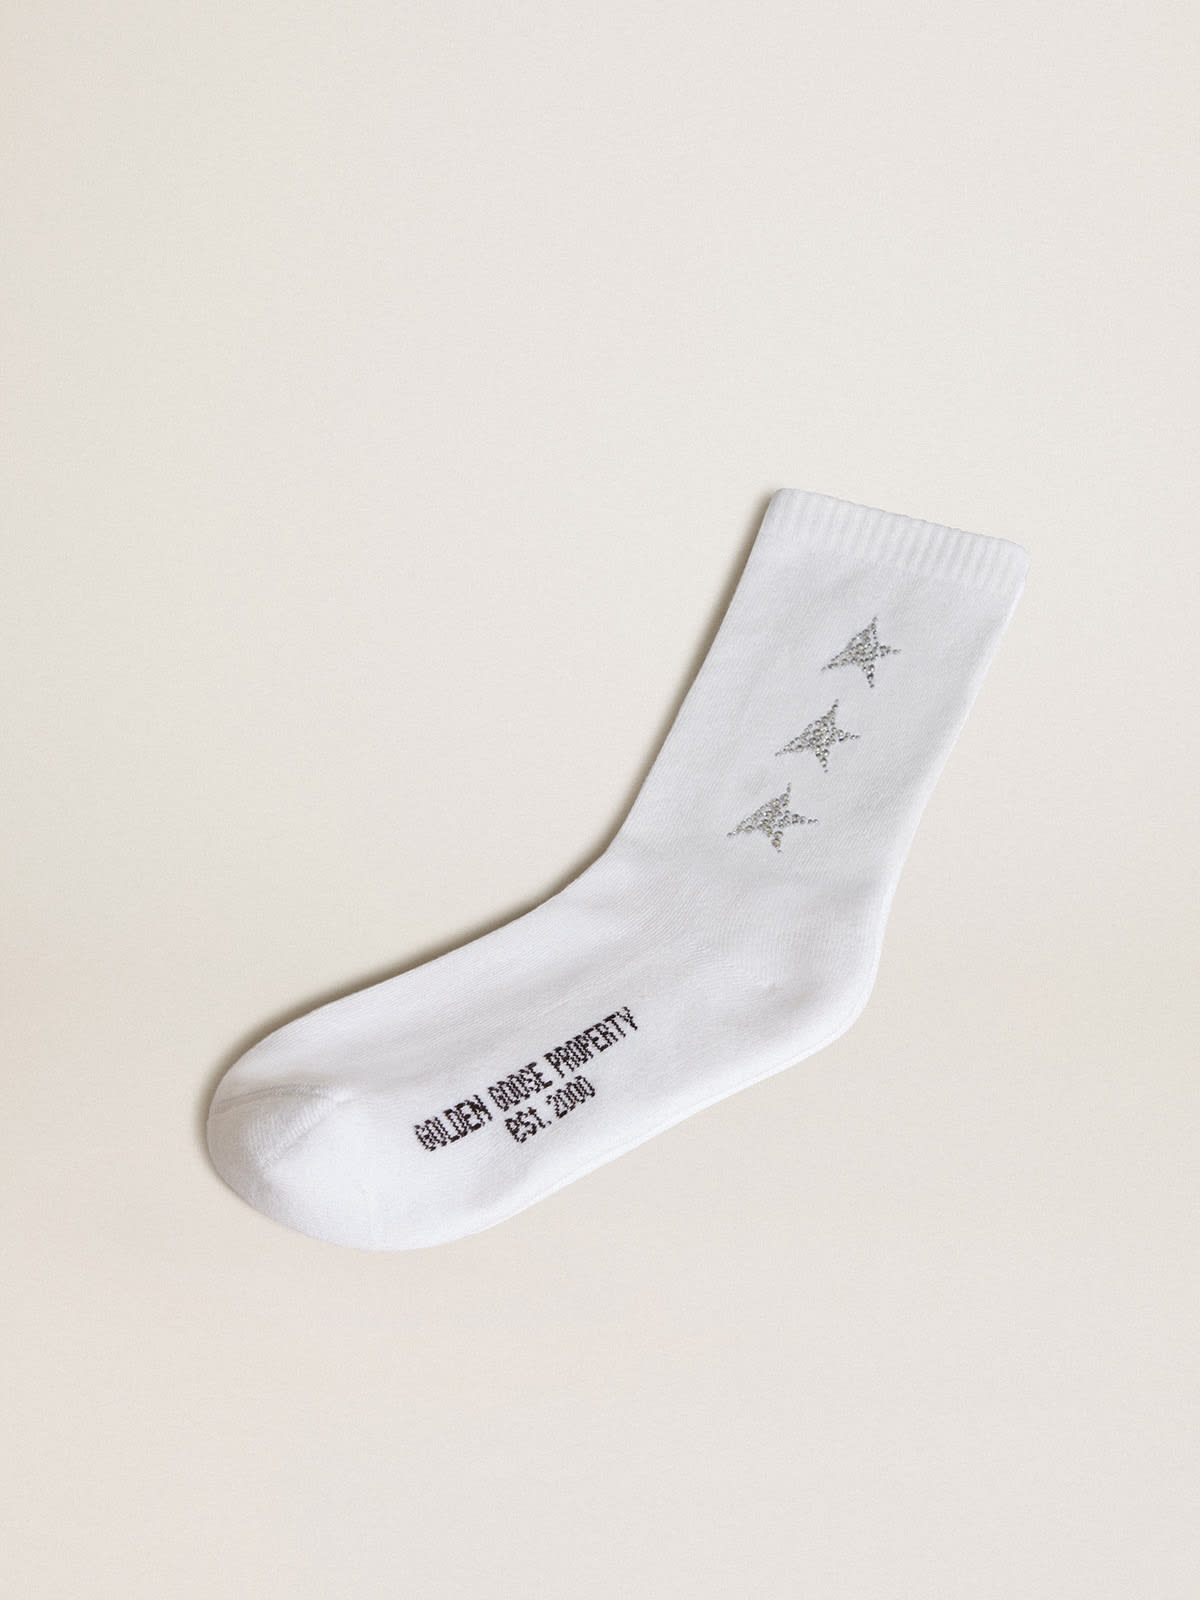 White socks with decorative crystal stars - 1